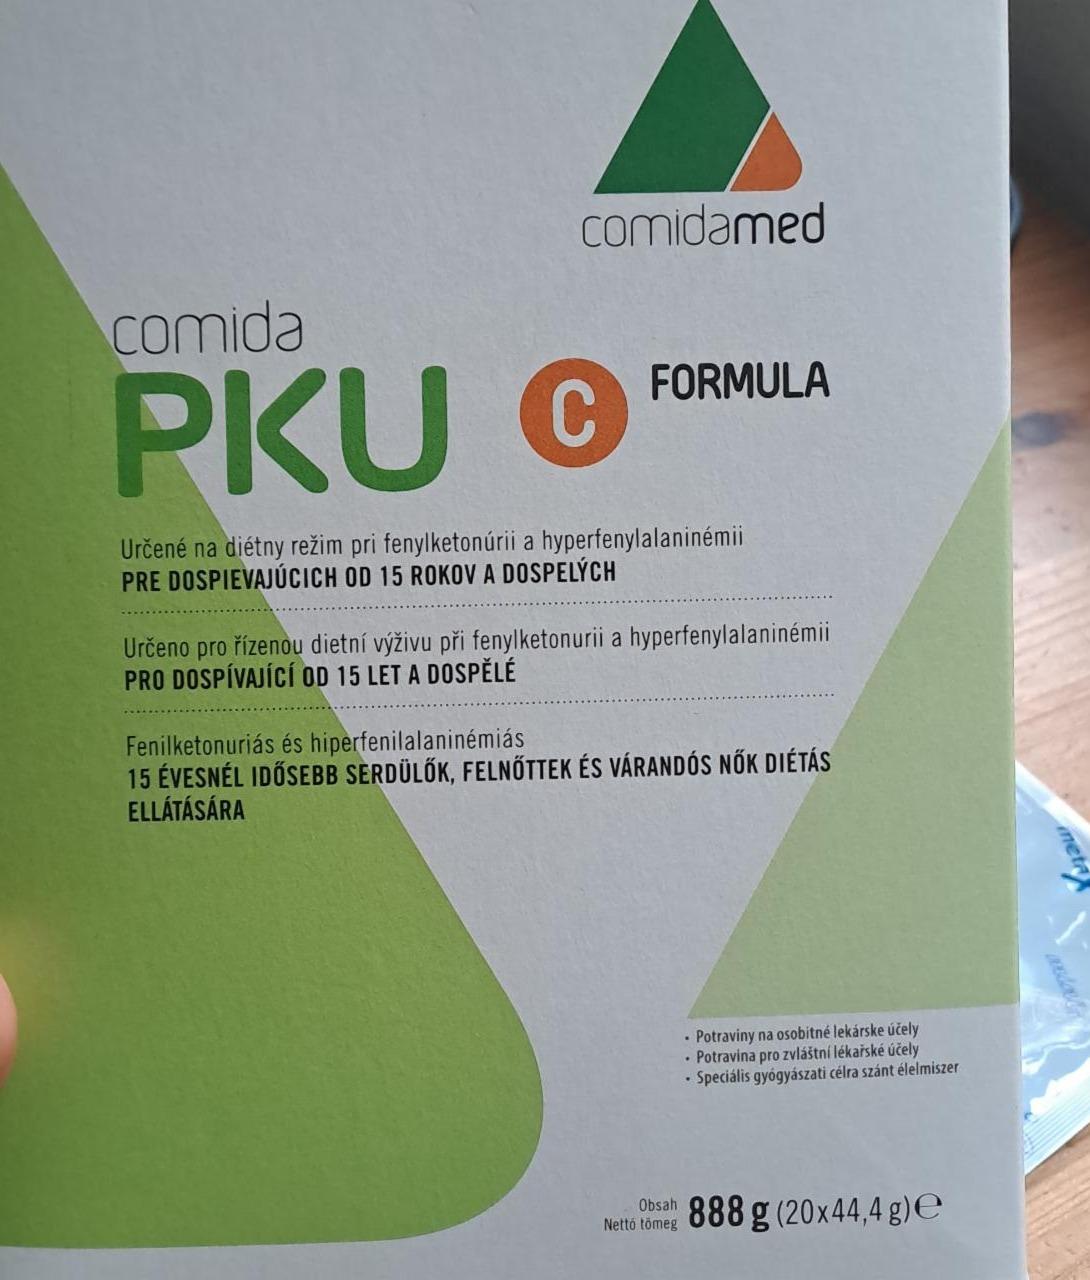 Fotografie - Comida PKU C Formula Comidamed